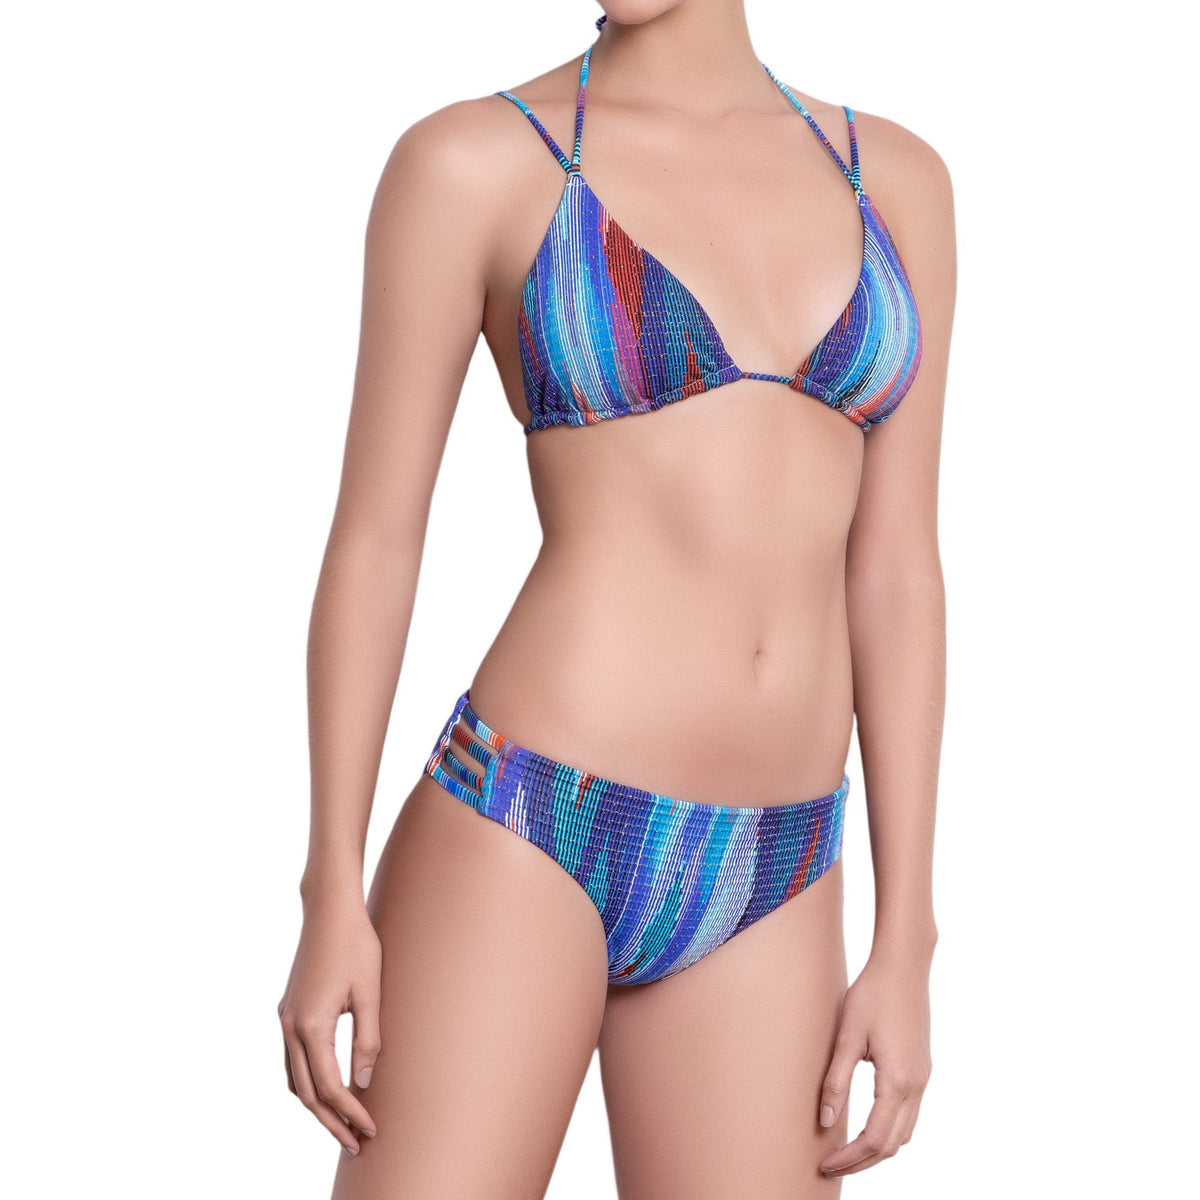 EVA strappy panty, textured printed bikini bottom by ALMA swimwear‚Äì front view 1